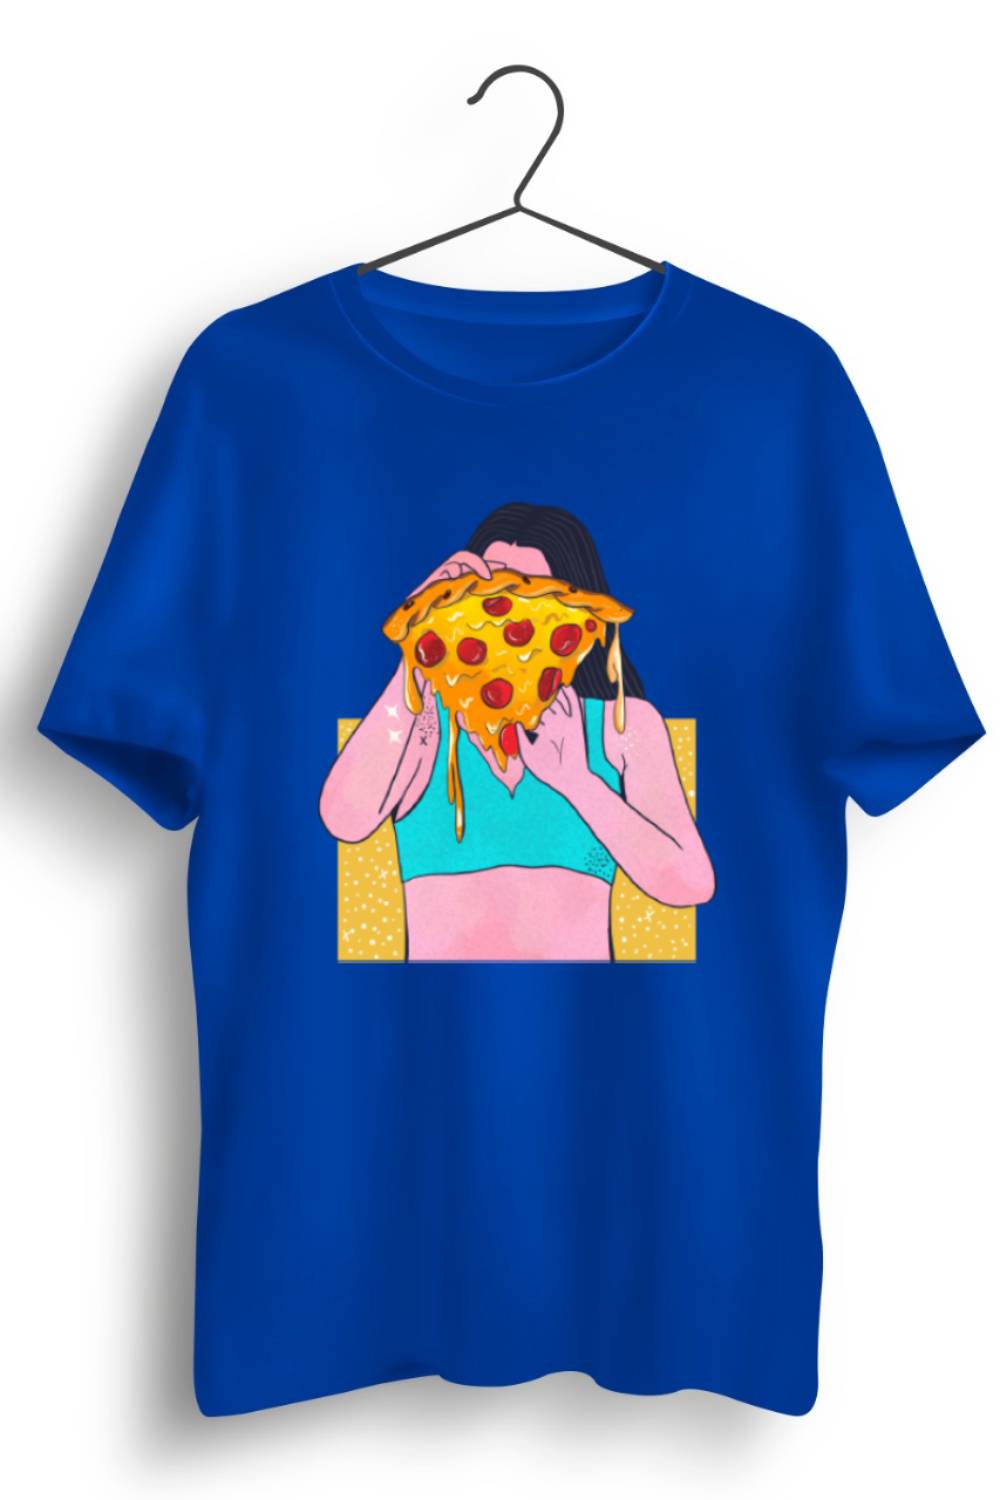 Pizza Girl Graphic Printed Blue Tshirt